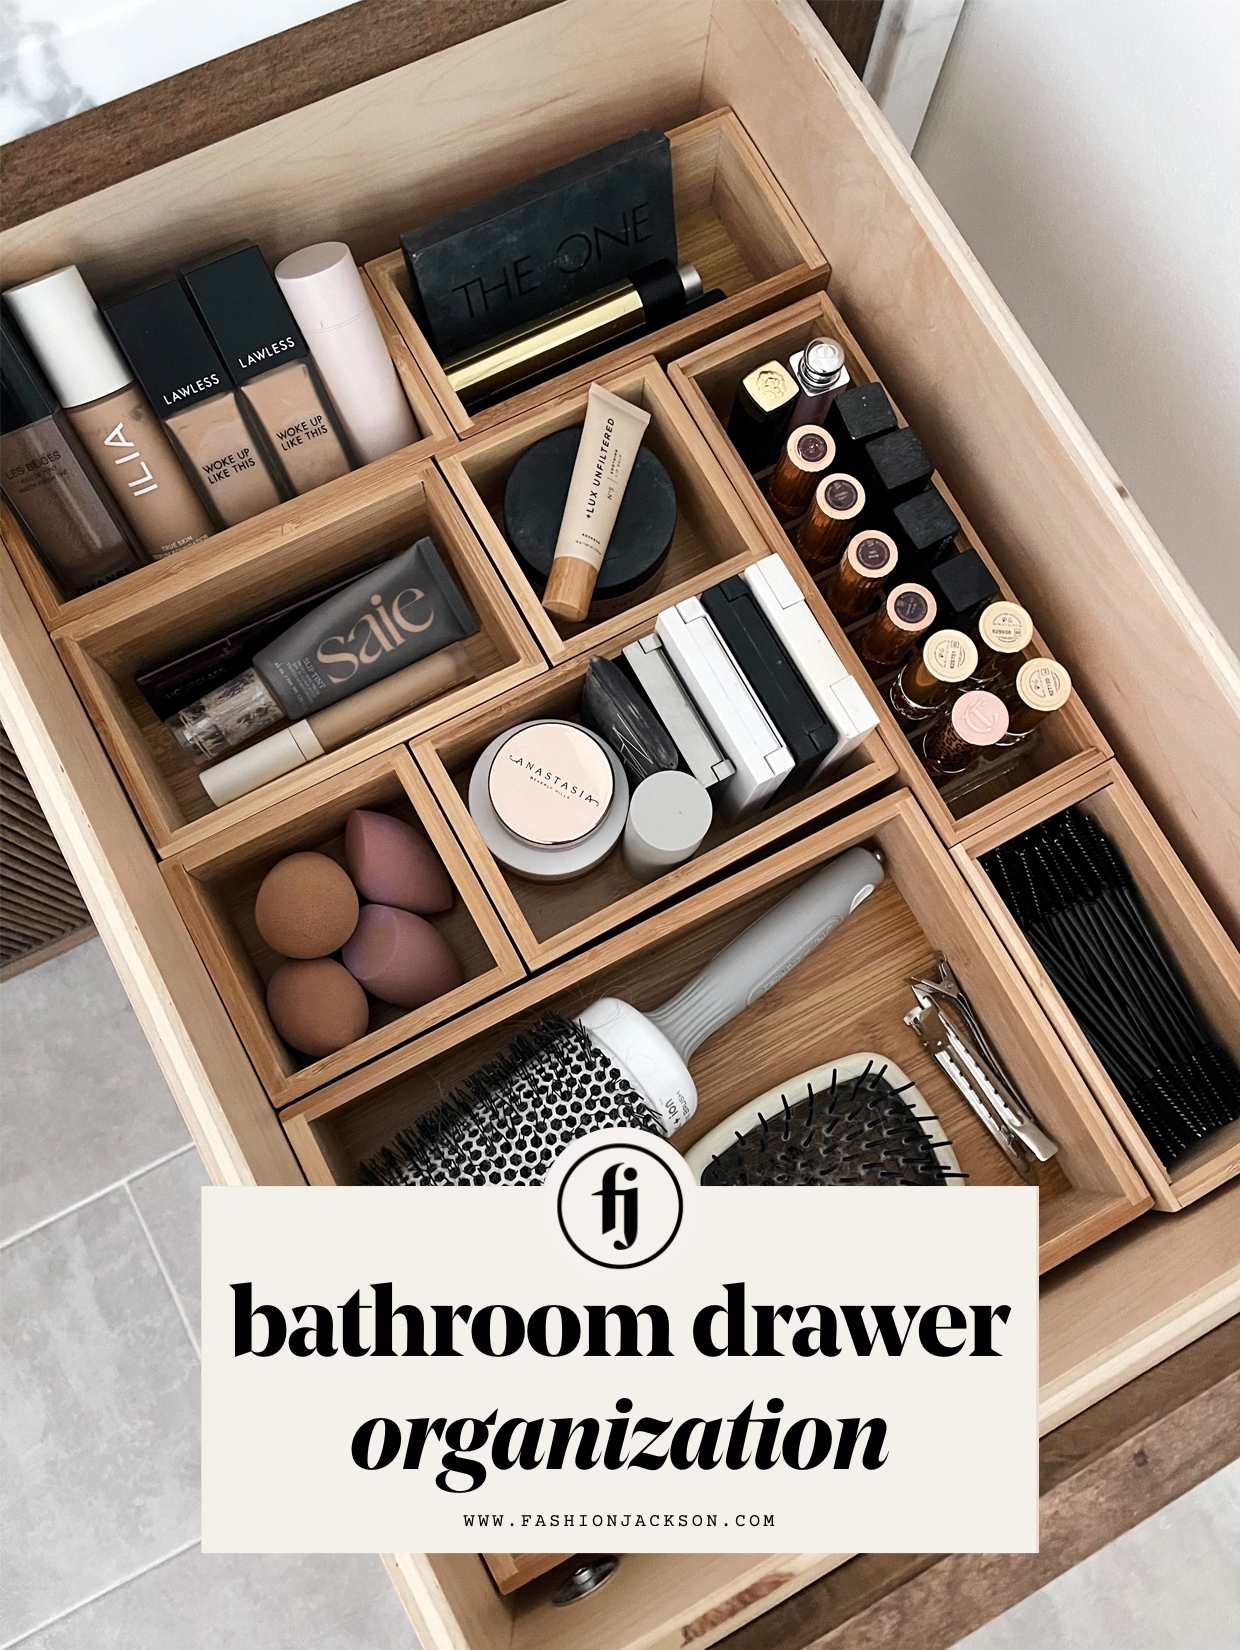 How I Keep My Bathroom Drawers Organized - Fashion Jackson